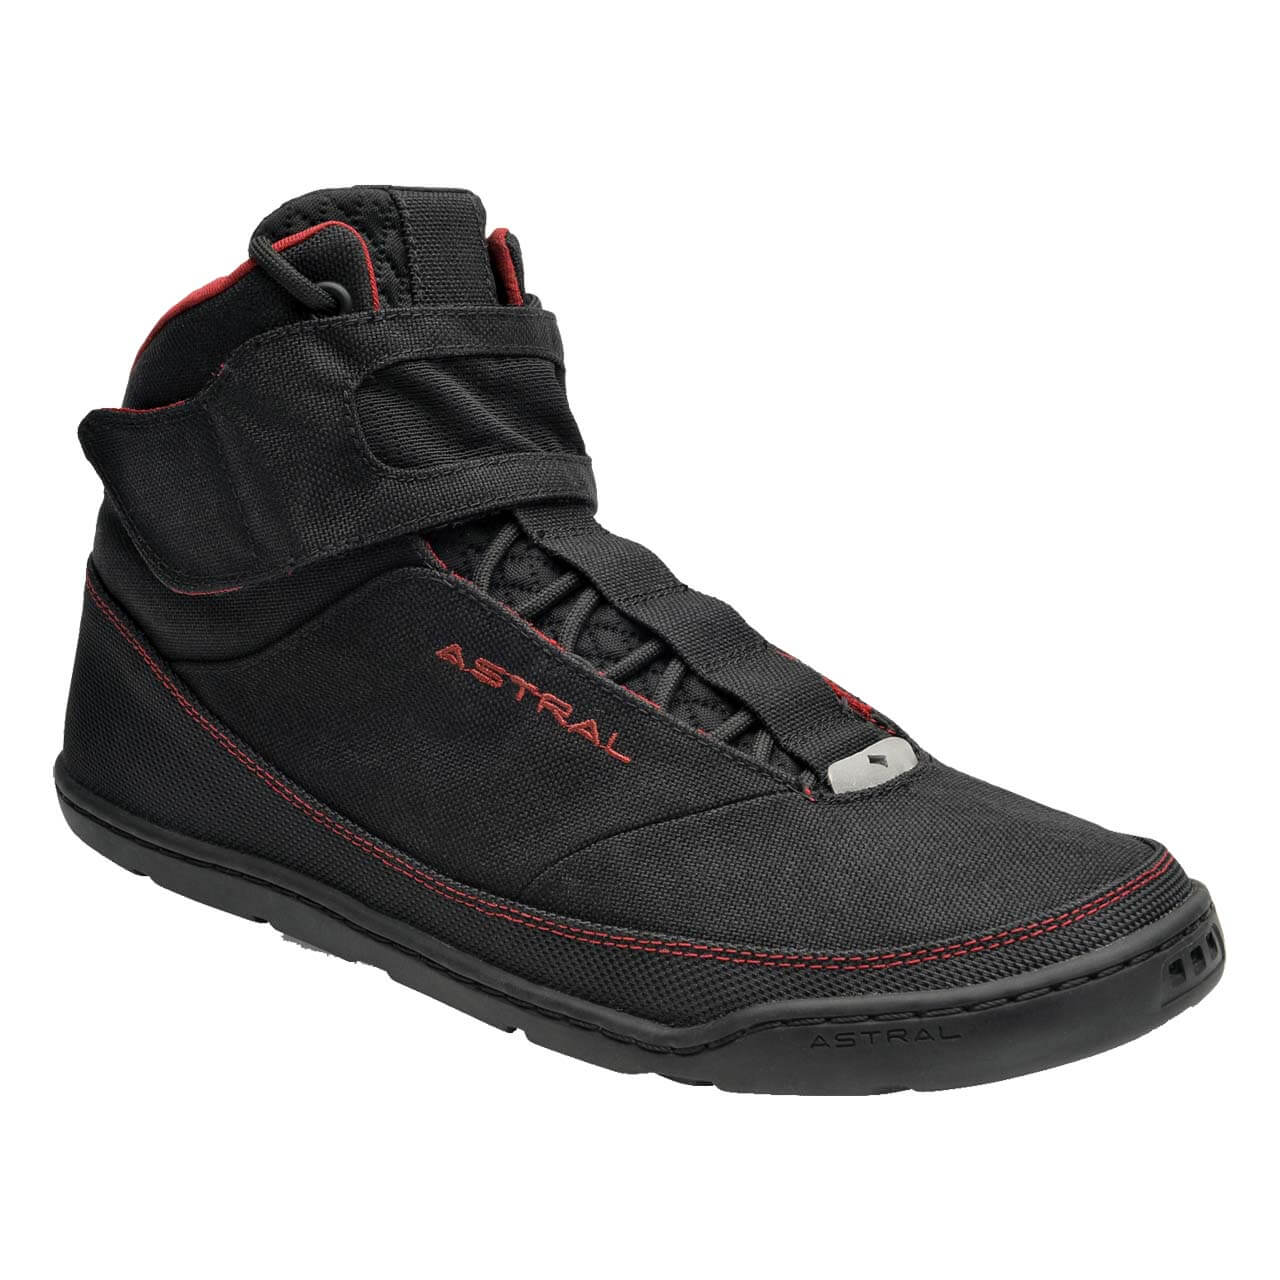 Astral Hiyak Kajak Boots - Black, US 8 / EU 41.3